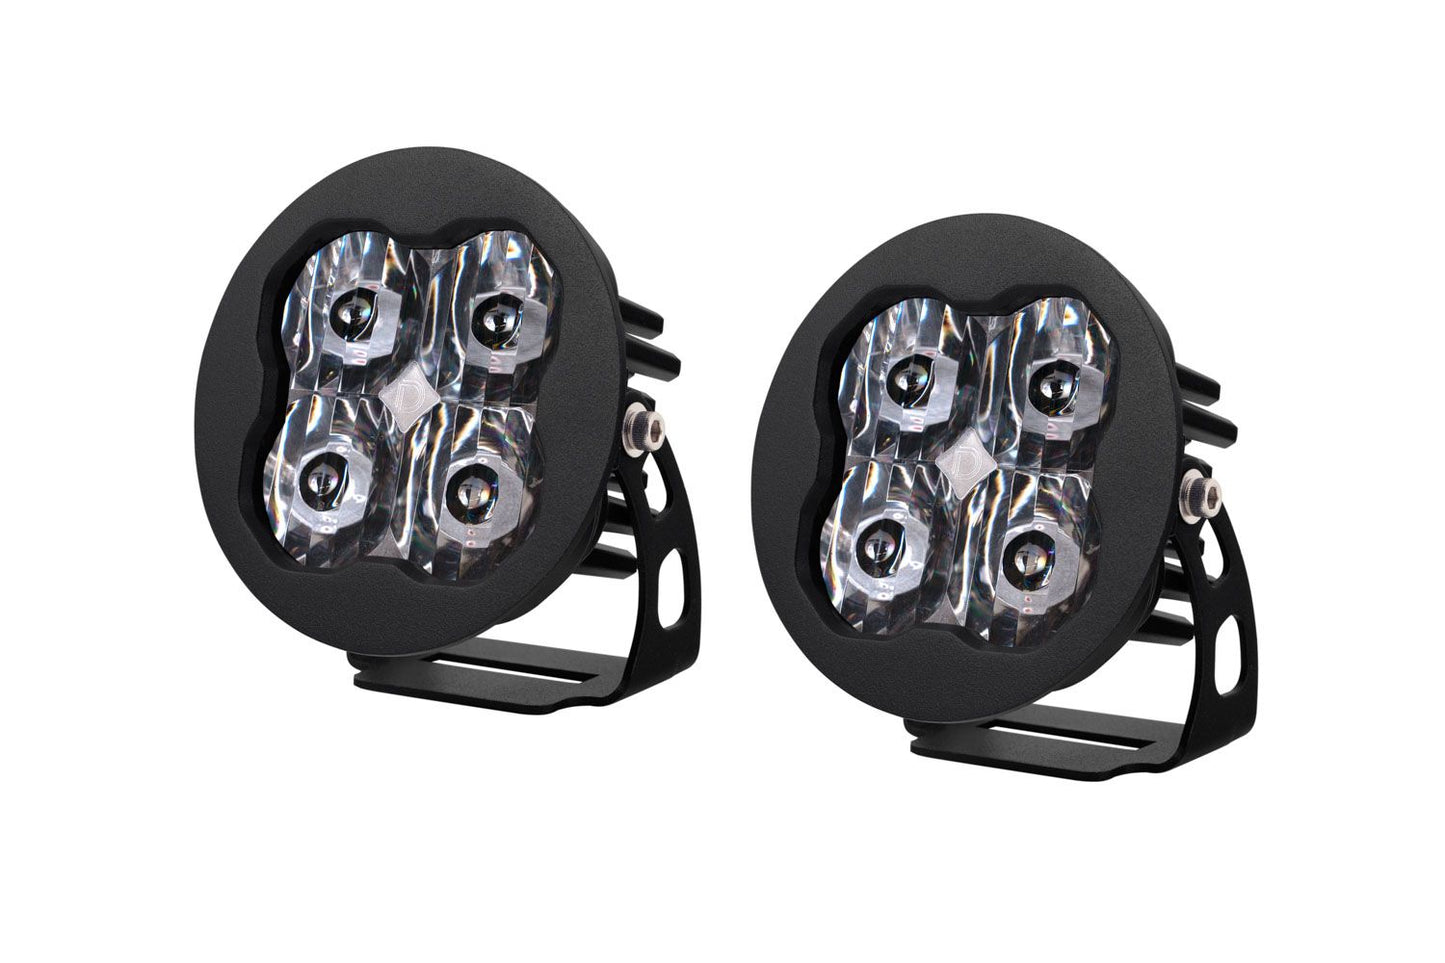 Diode Dynamics - Stage Series 3" SAE/DOT White Round LED Pod (pair)